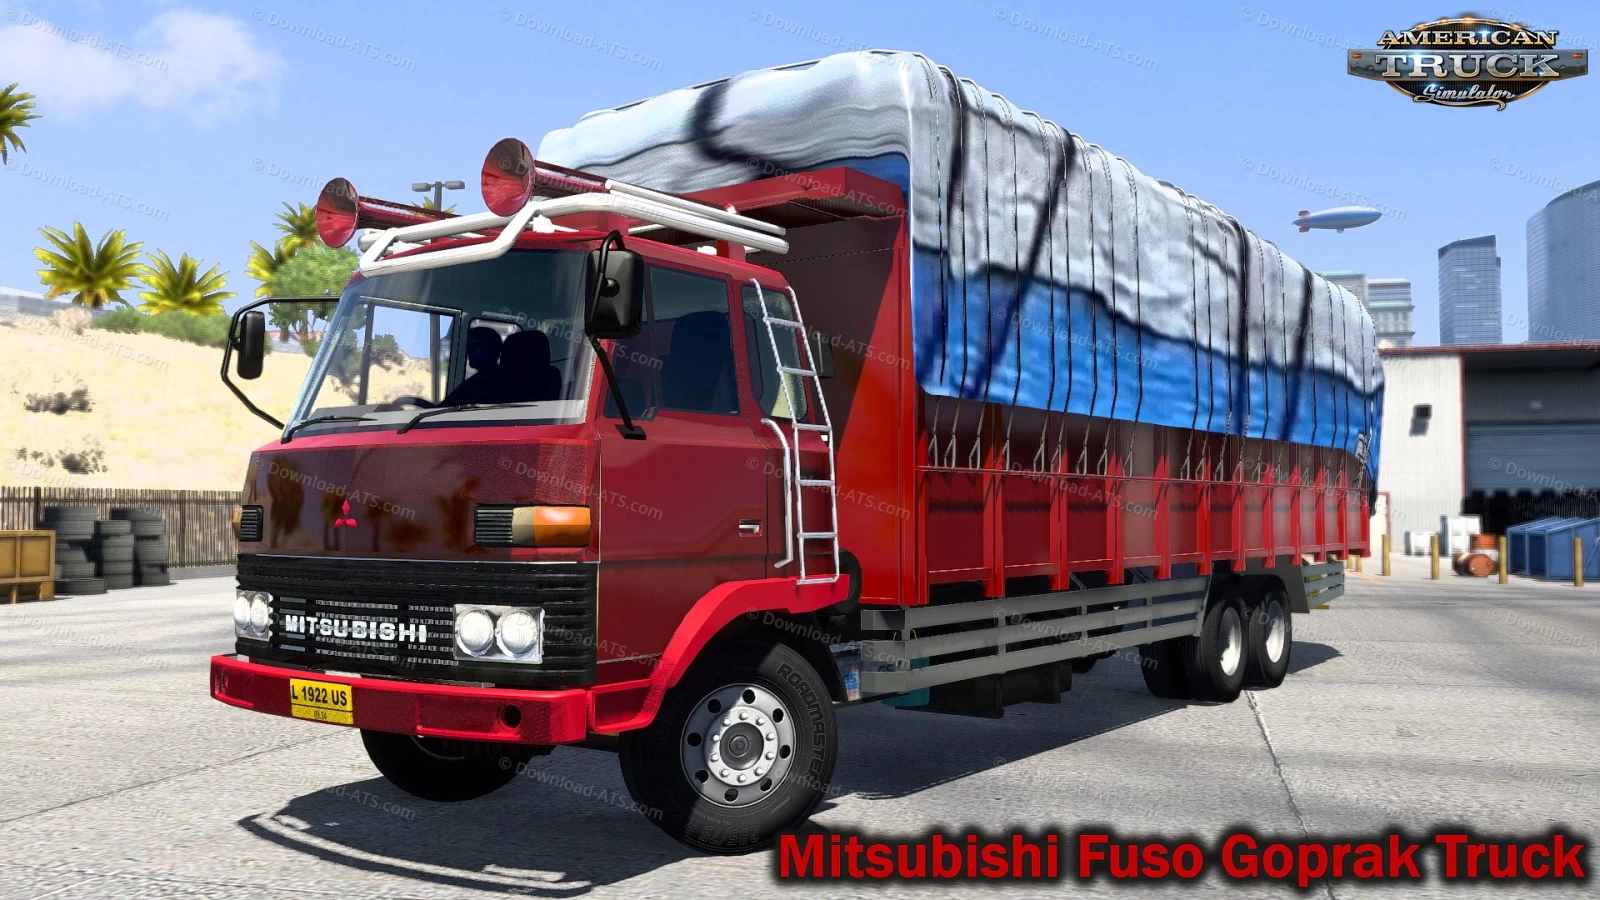 Mitsubishi Fuso Goprak Truck v1.0 (1.49.x) for ATS